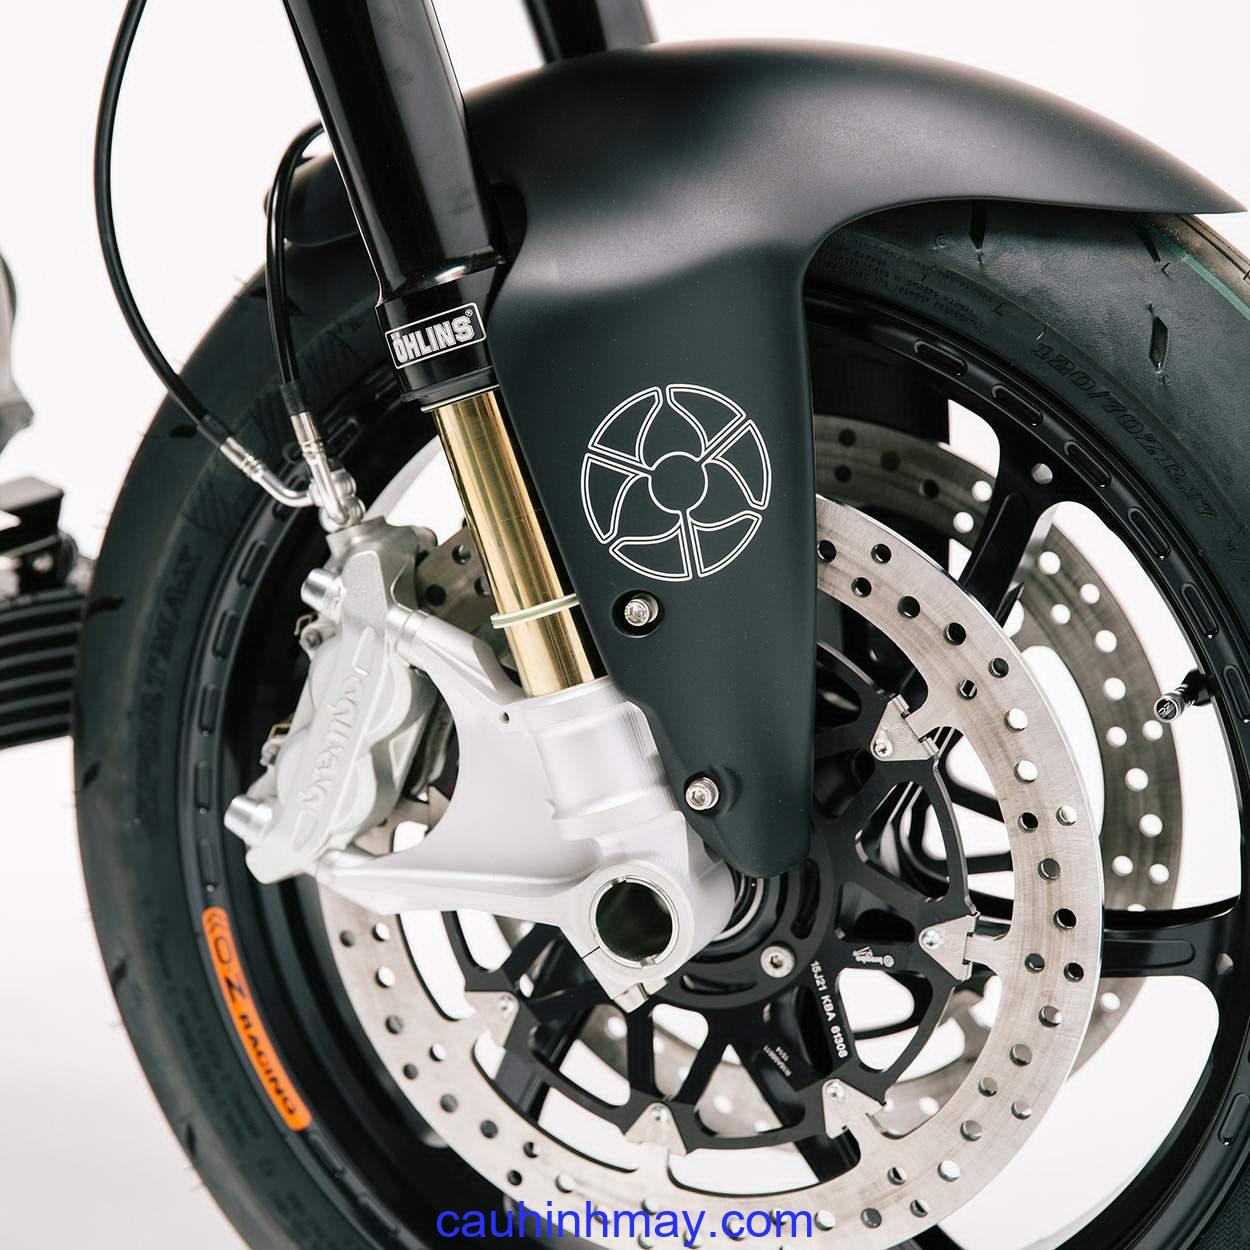 DUCATI LEGGERO GTS BY WALT SIEGL MOTORCYCLES - cauhinhmay.com